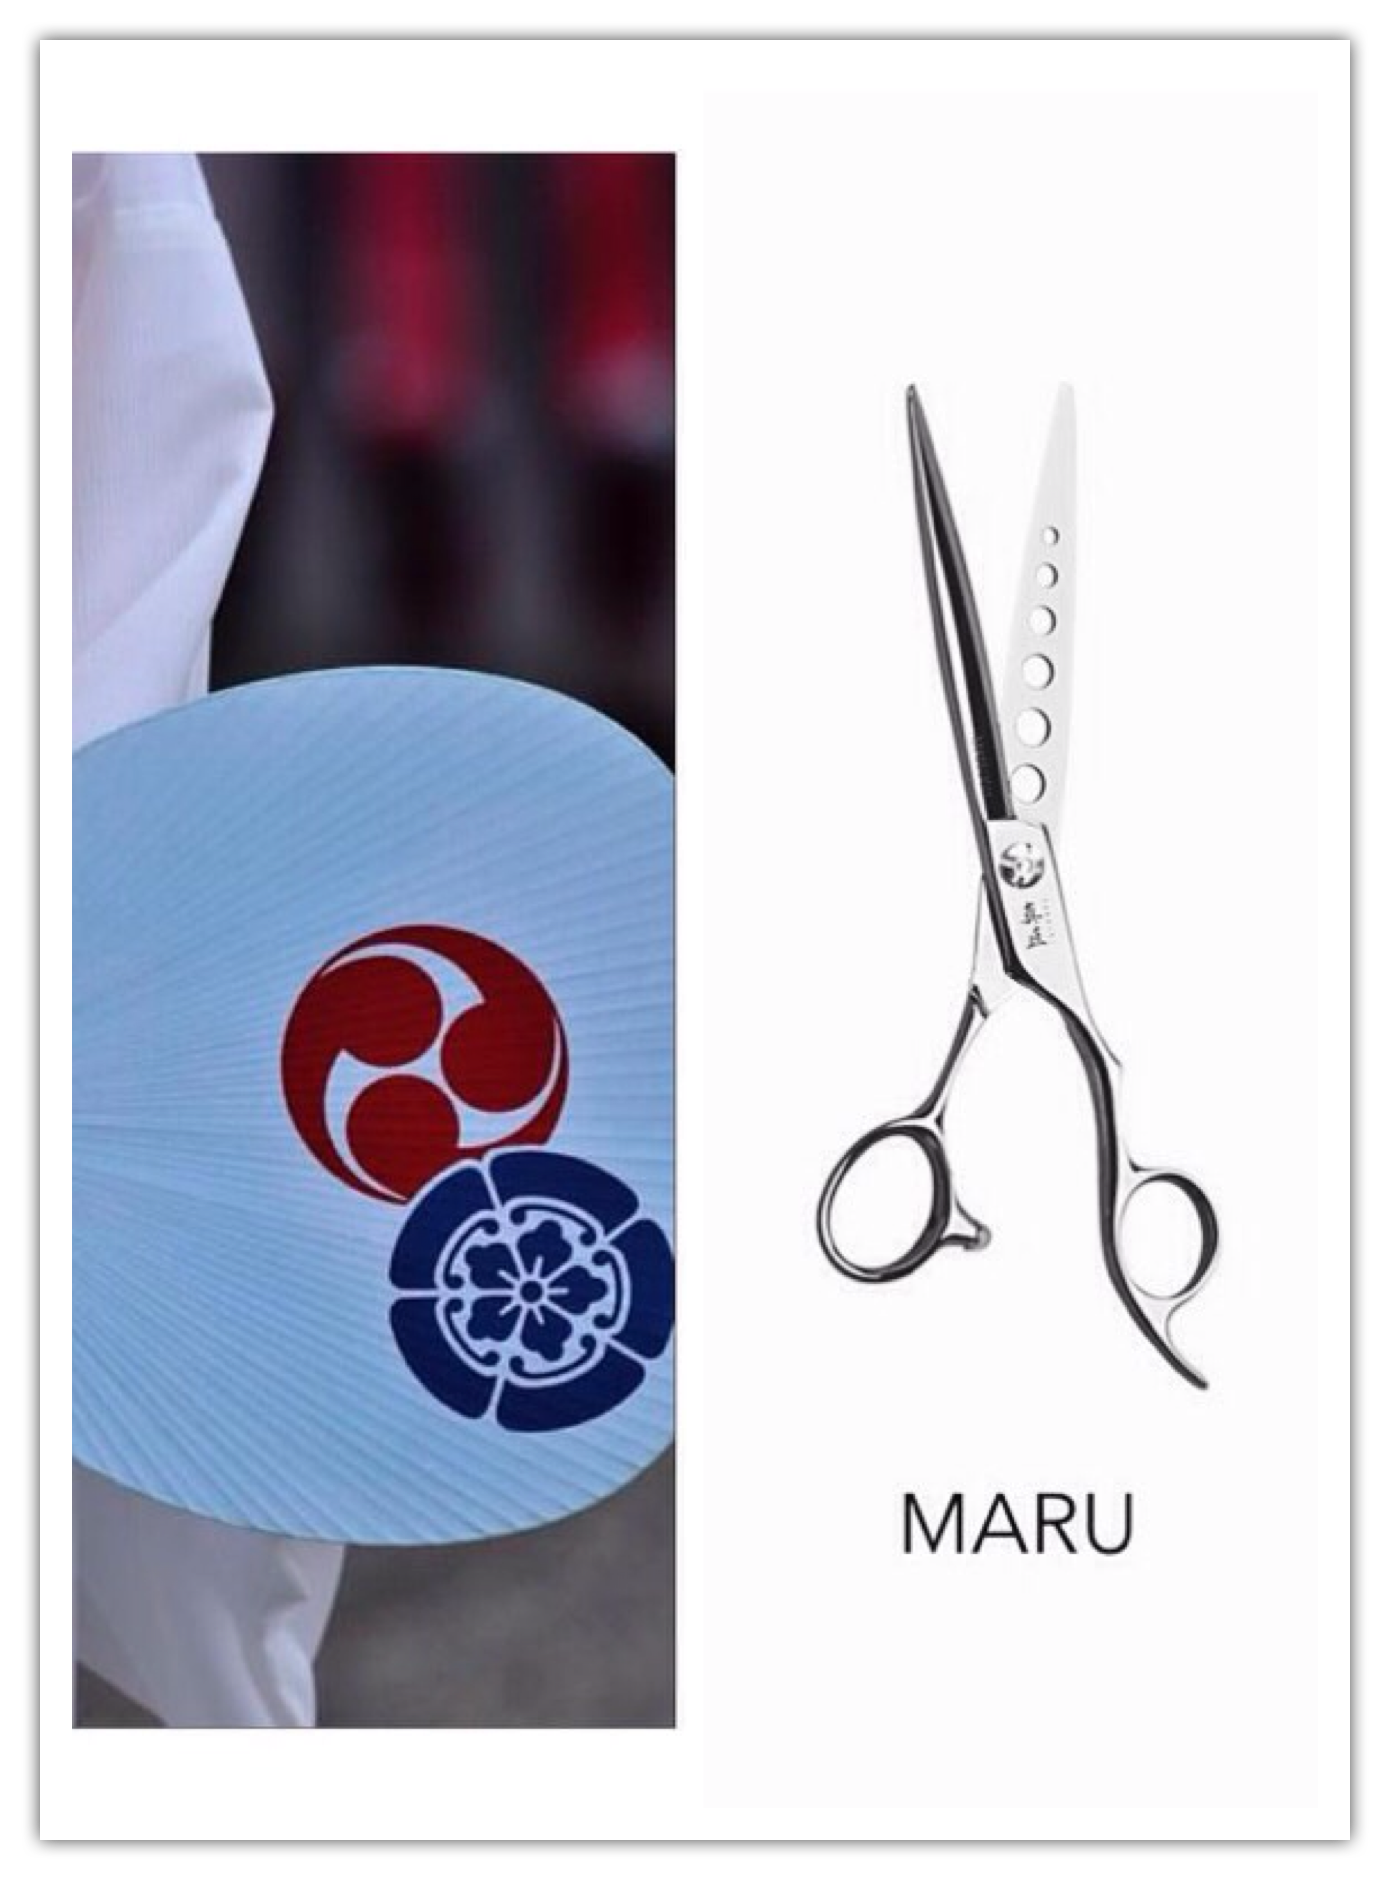 MARU / Japanese for 'CIRCLE'